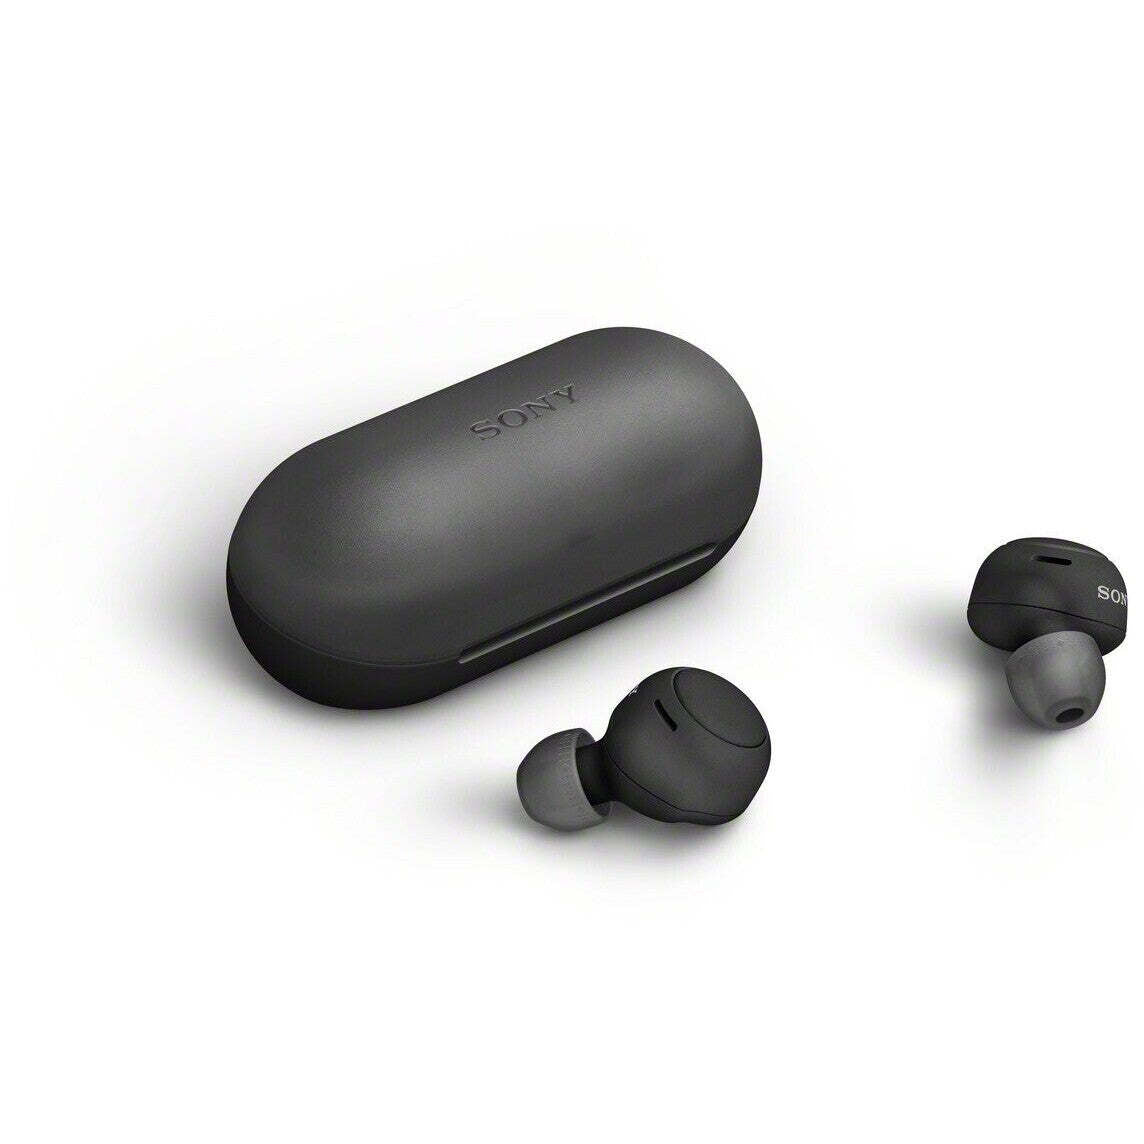 True Wireless sluchátka Sony WFC500, černá VYBALENO